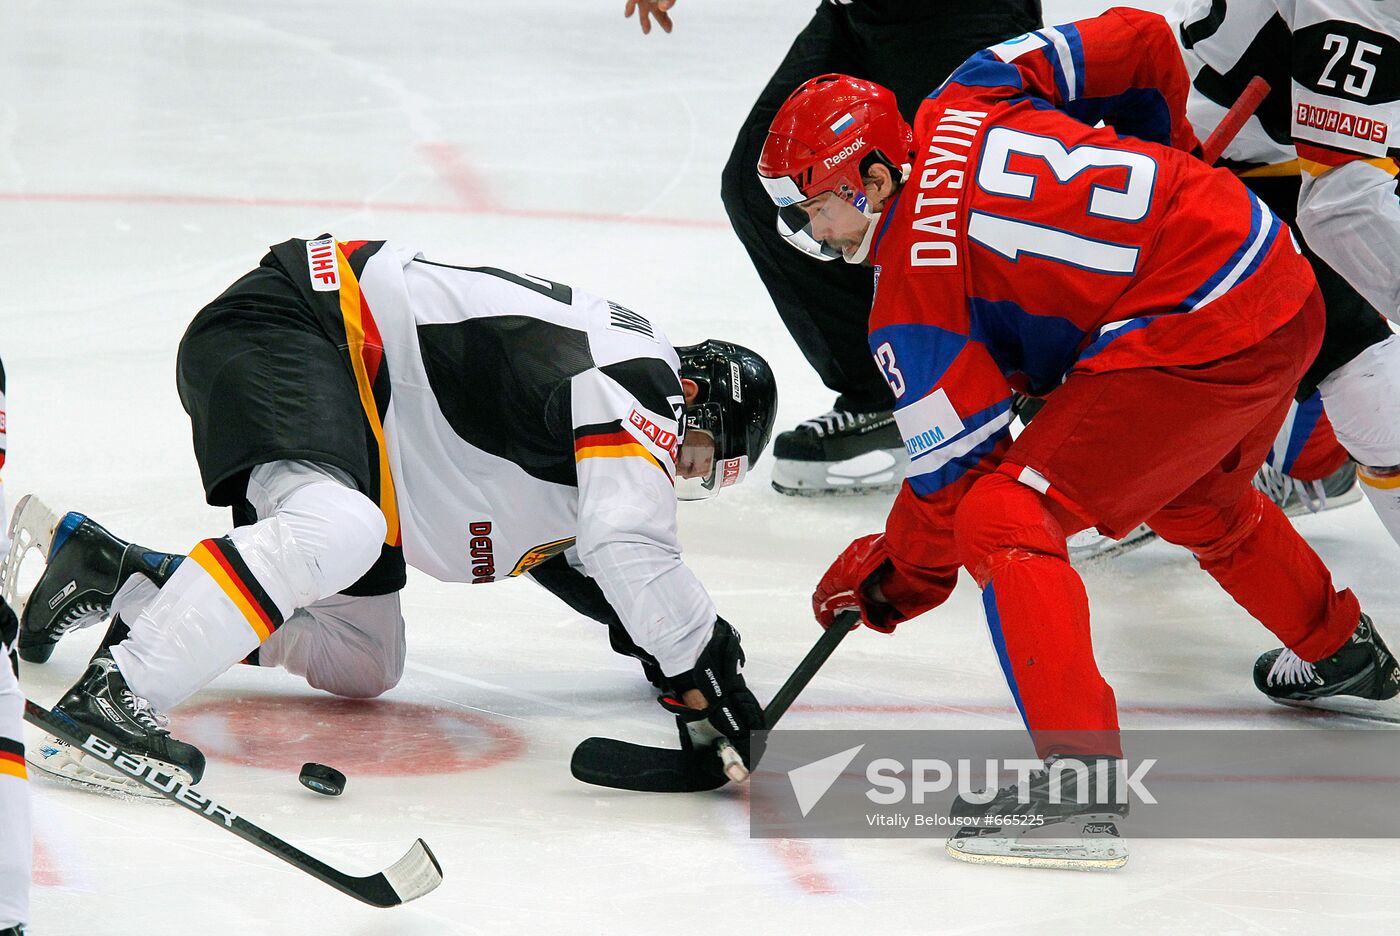 2010 Ice Hockey World Championship: Russia vs. Germany